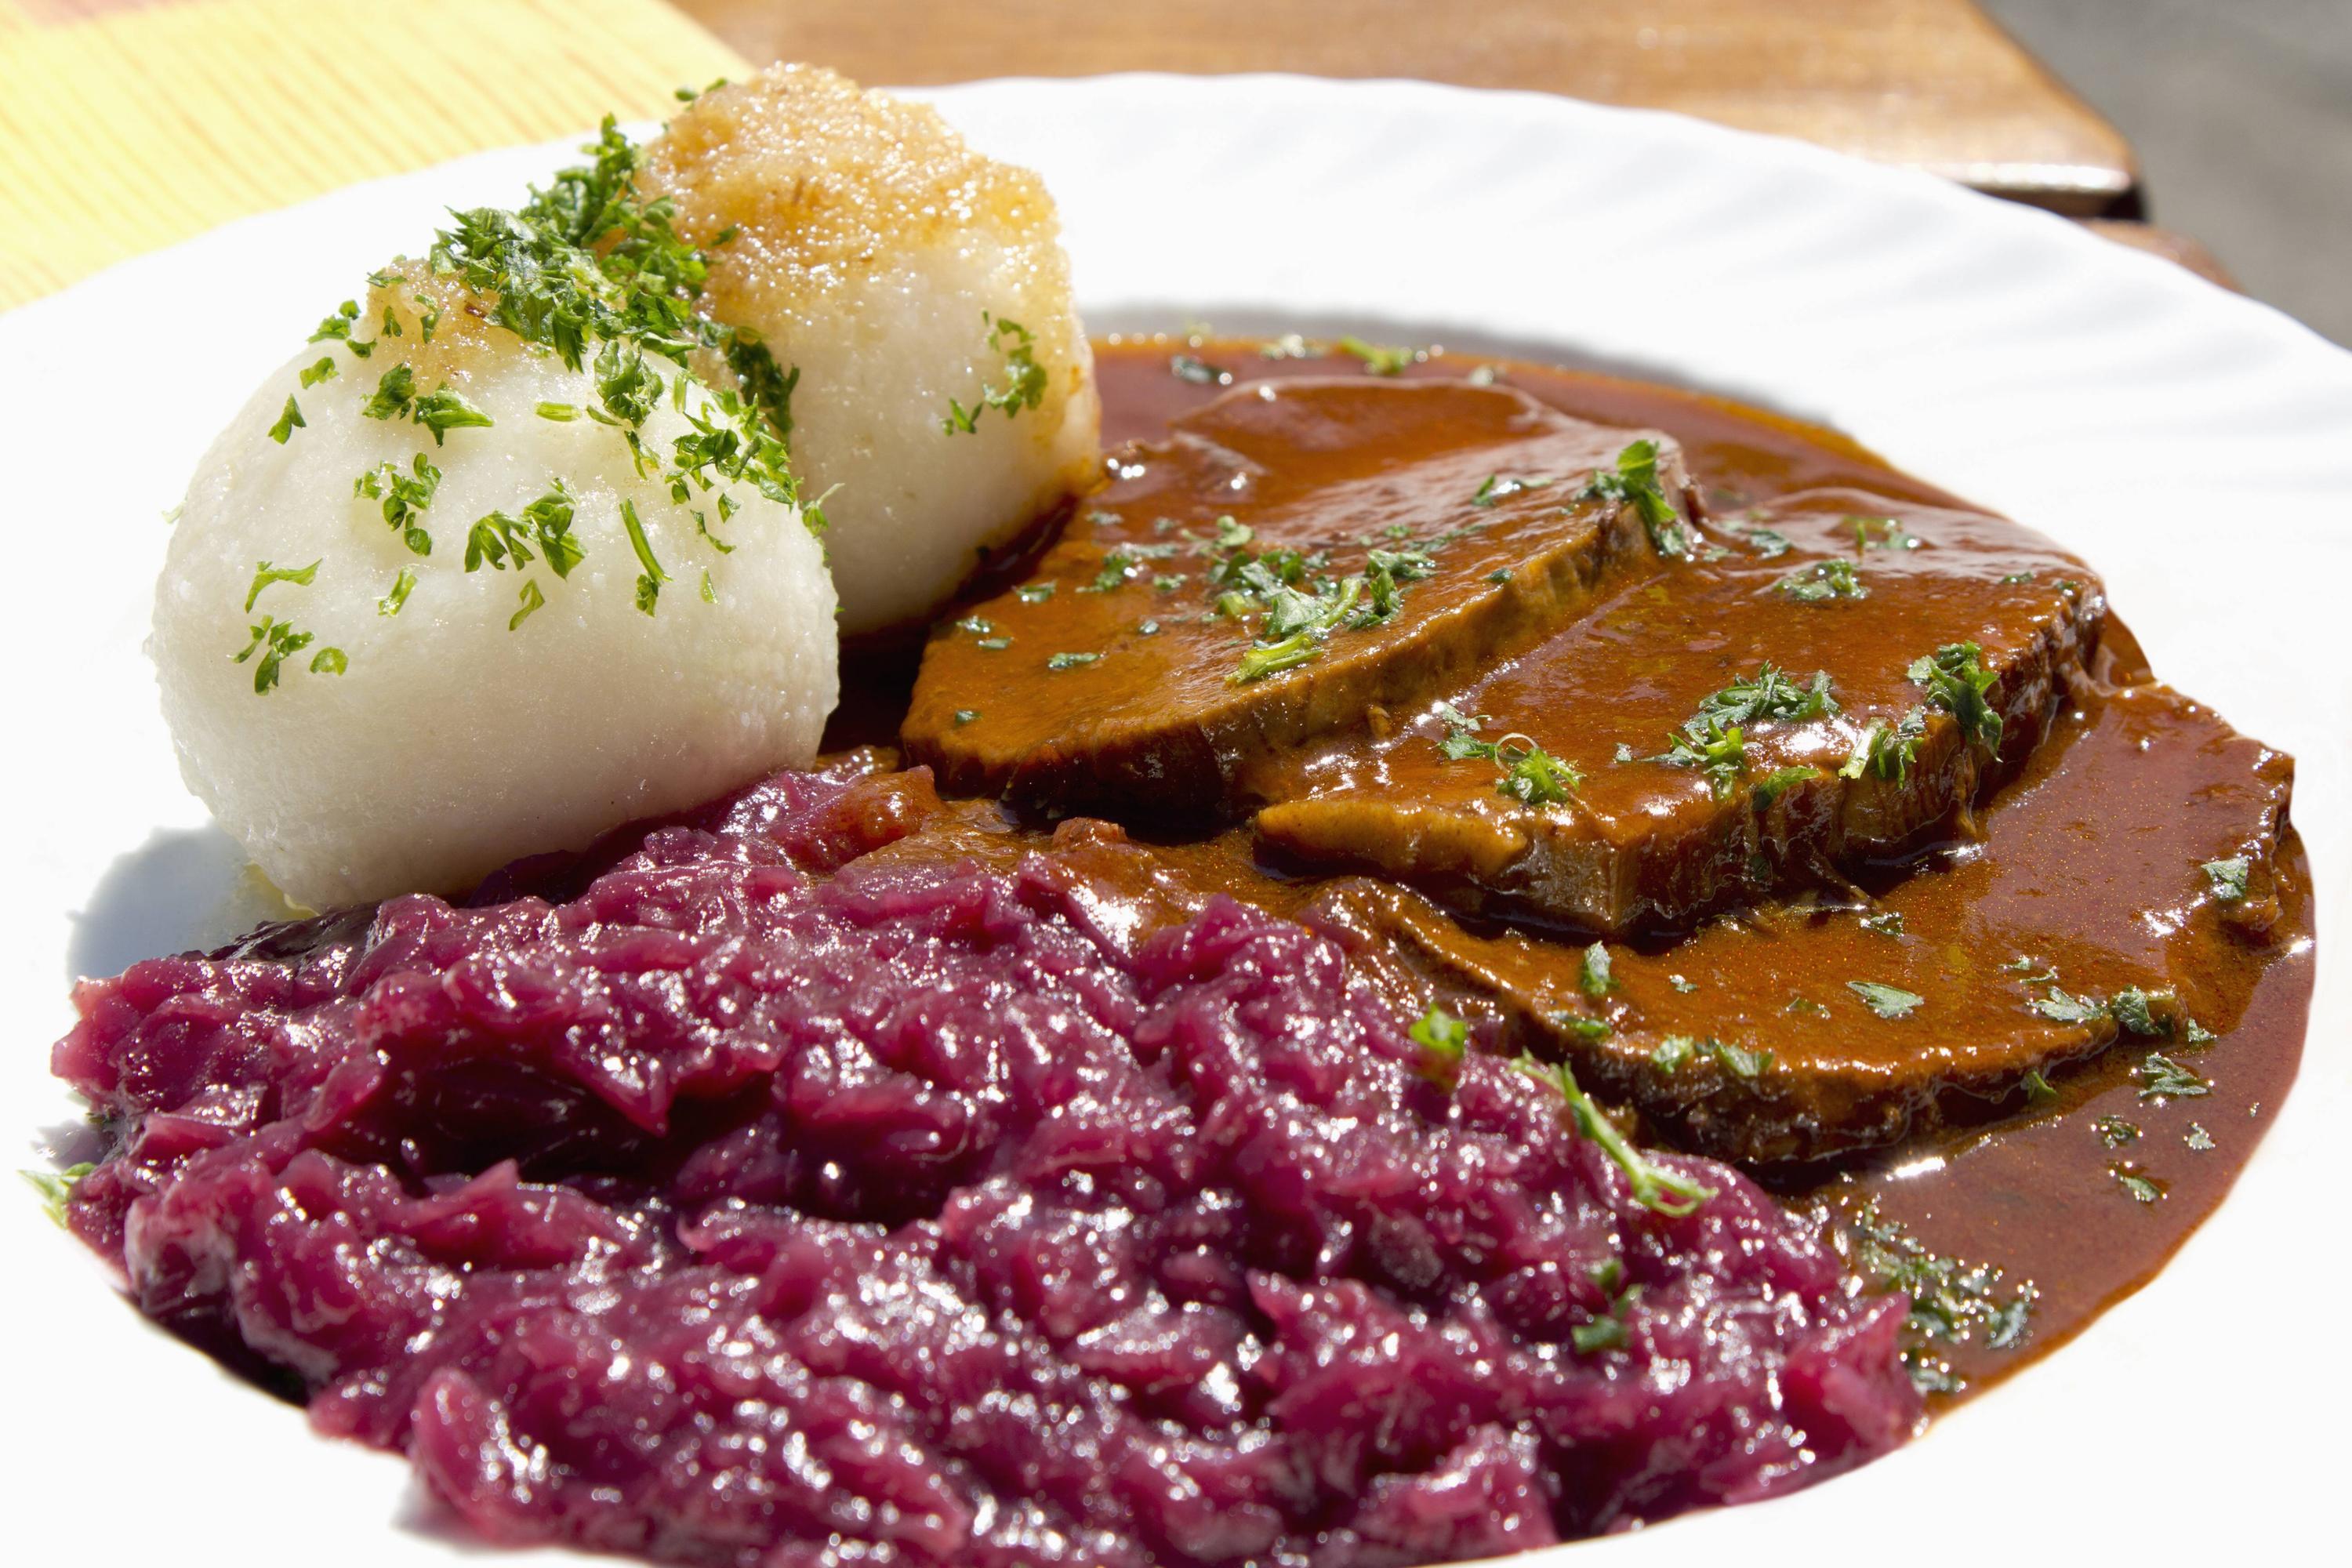 knorr sauerbraten recipe translated